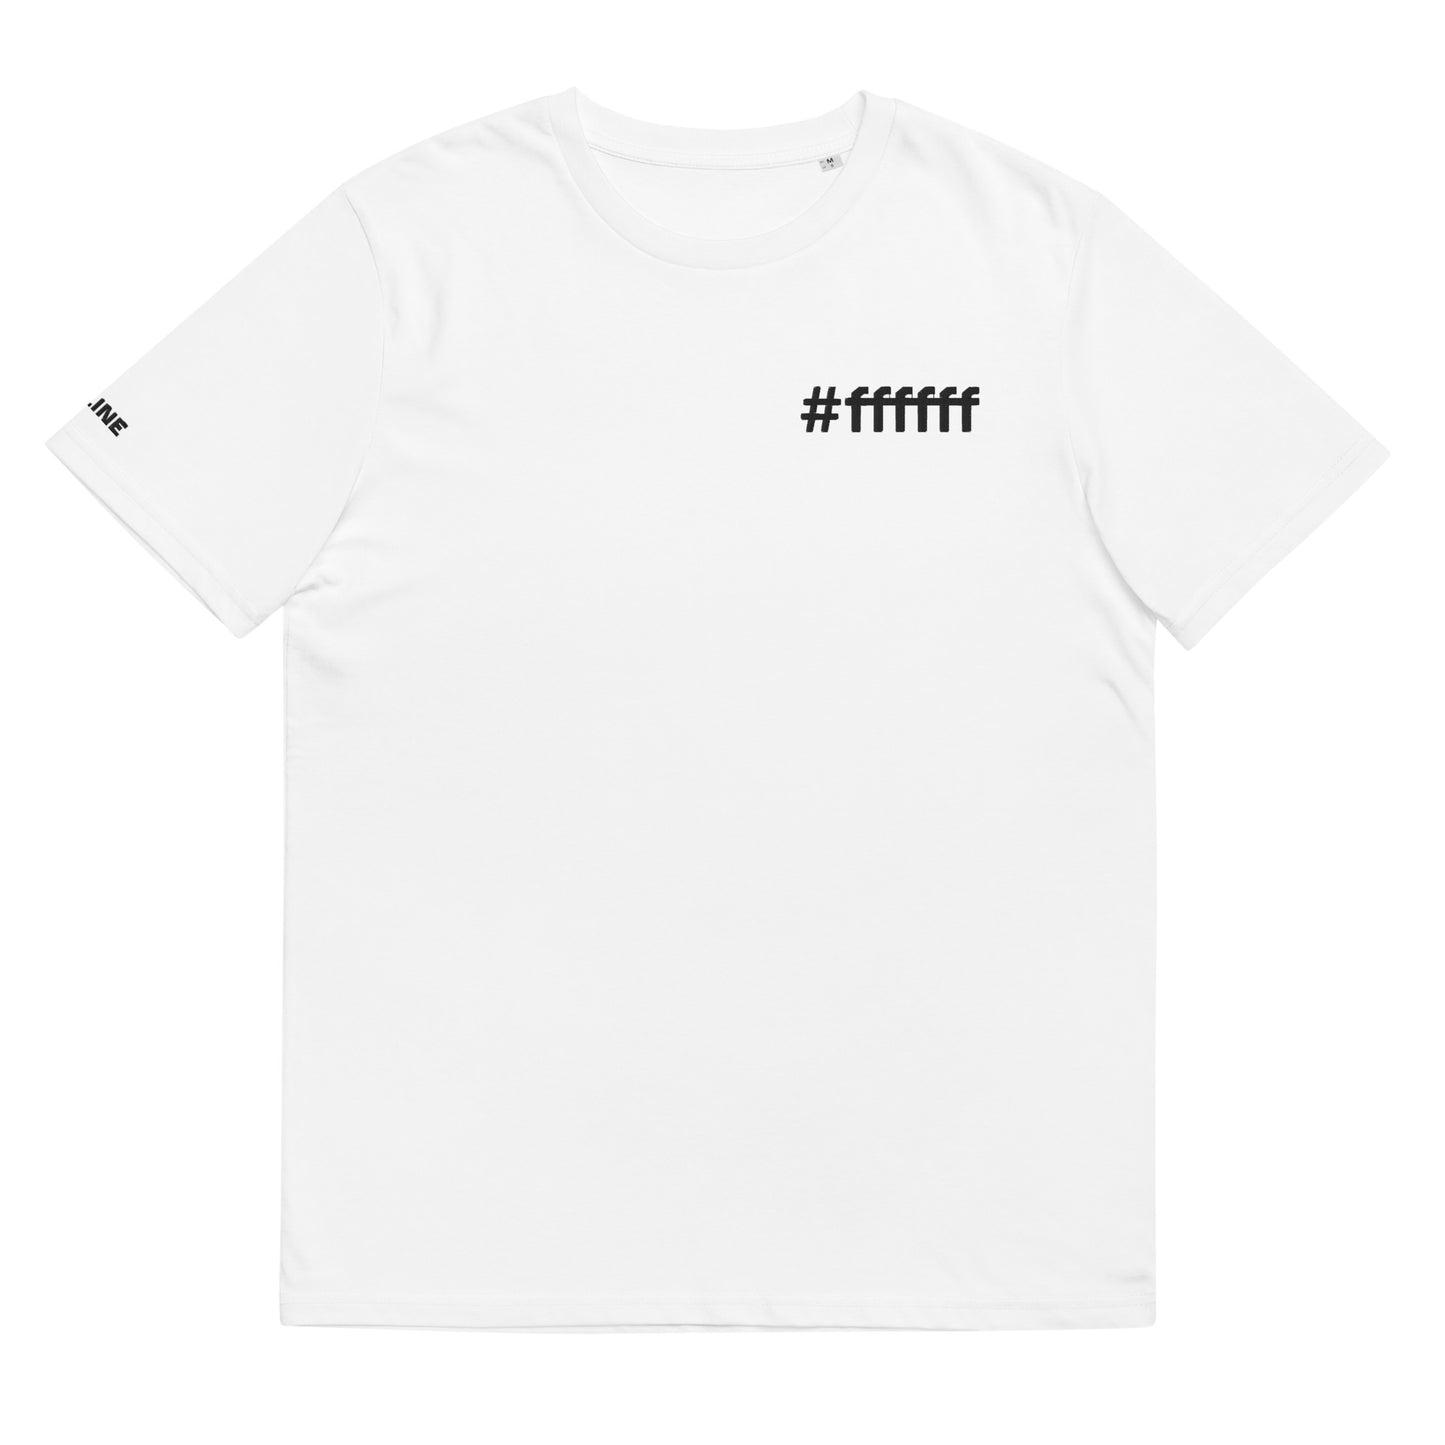 #ffffff Embroidered Unisex organic cotton t-shirt